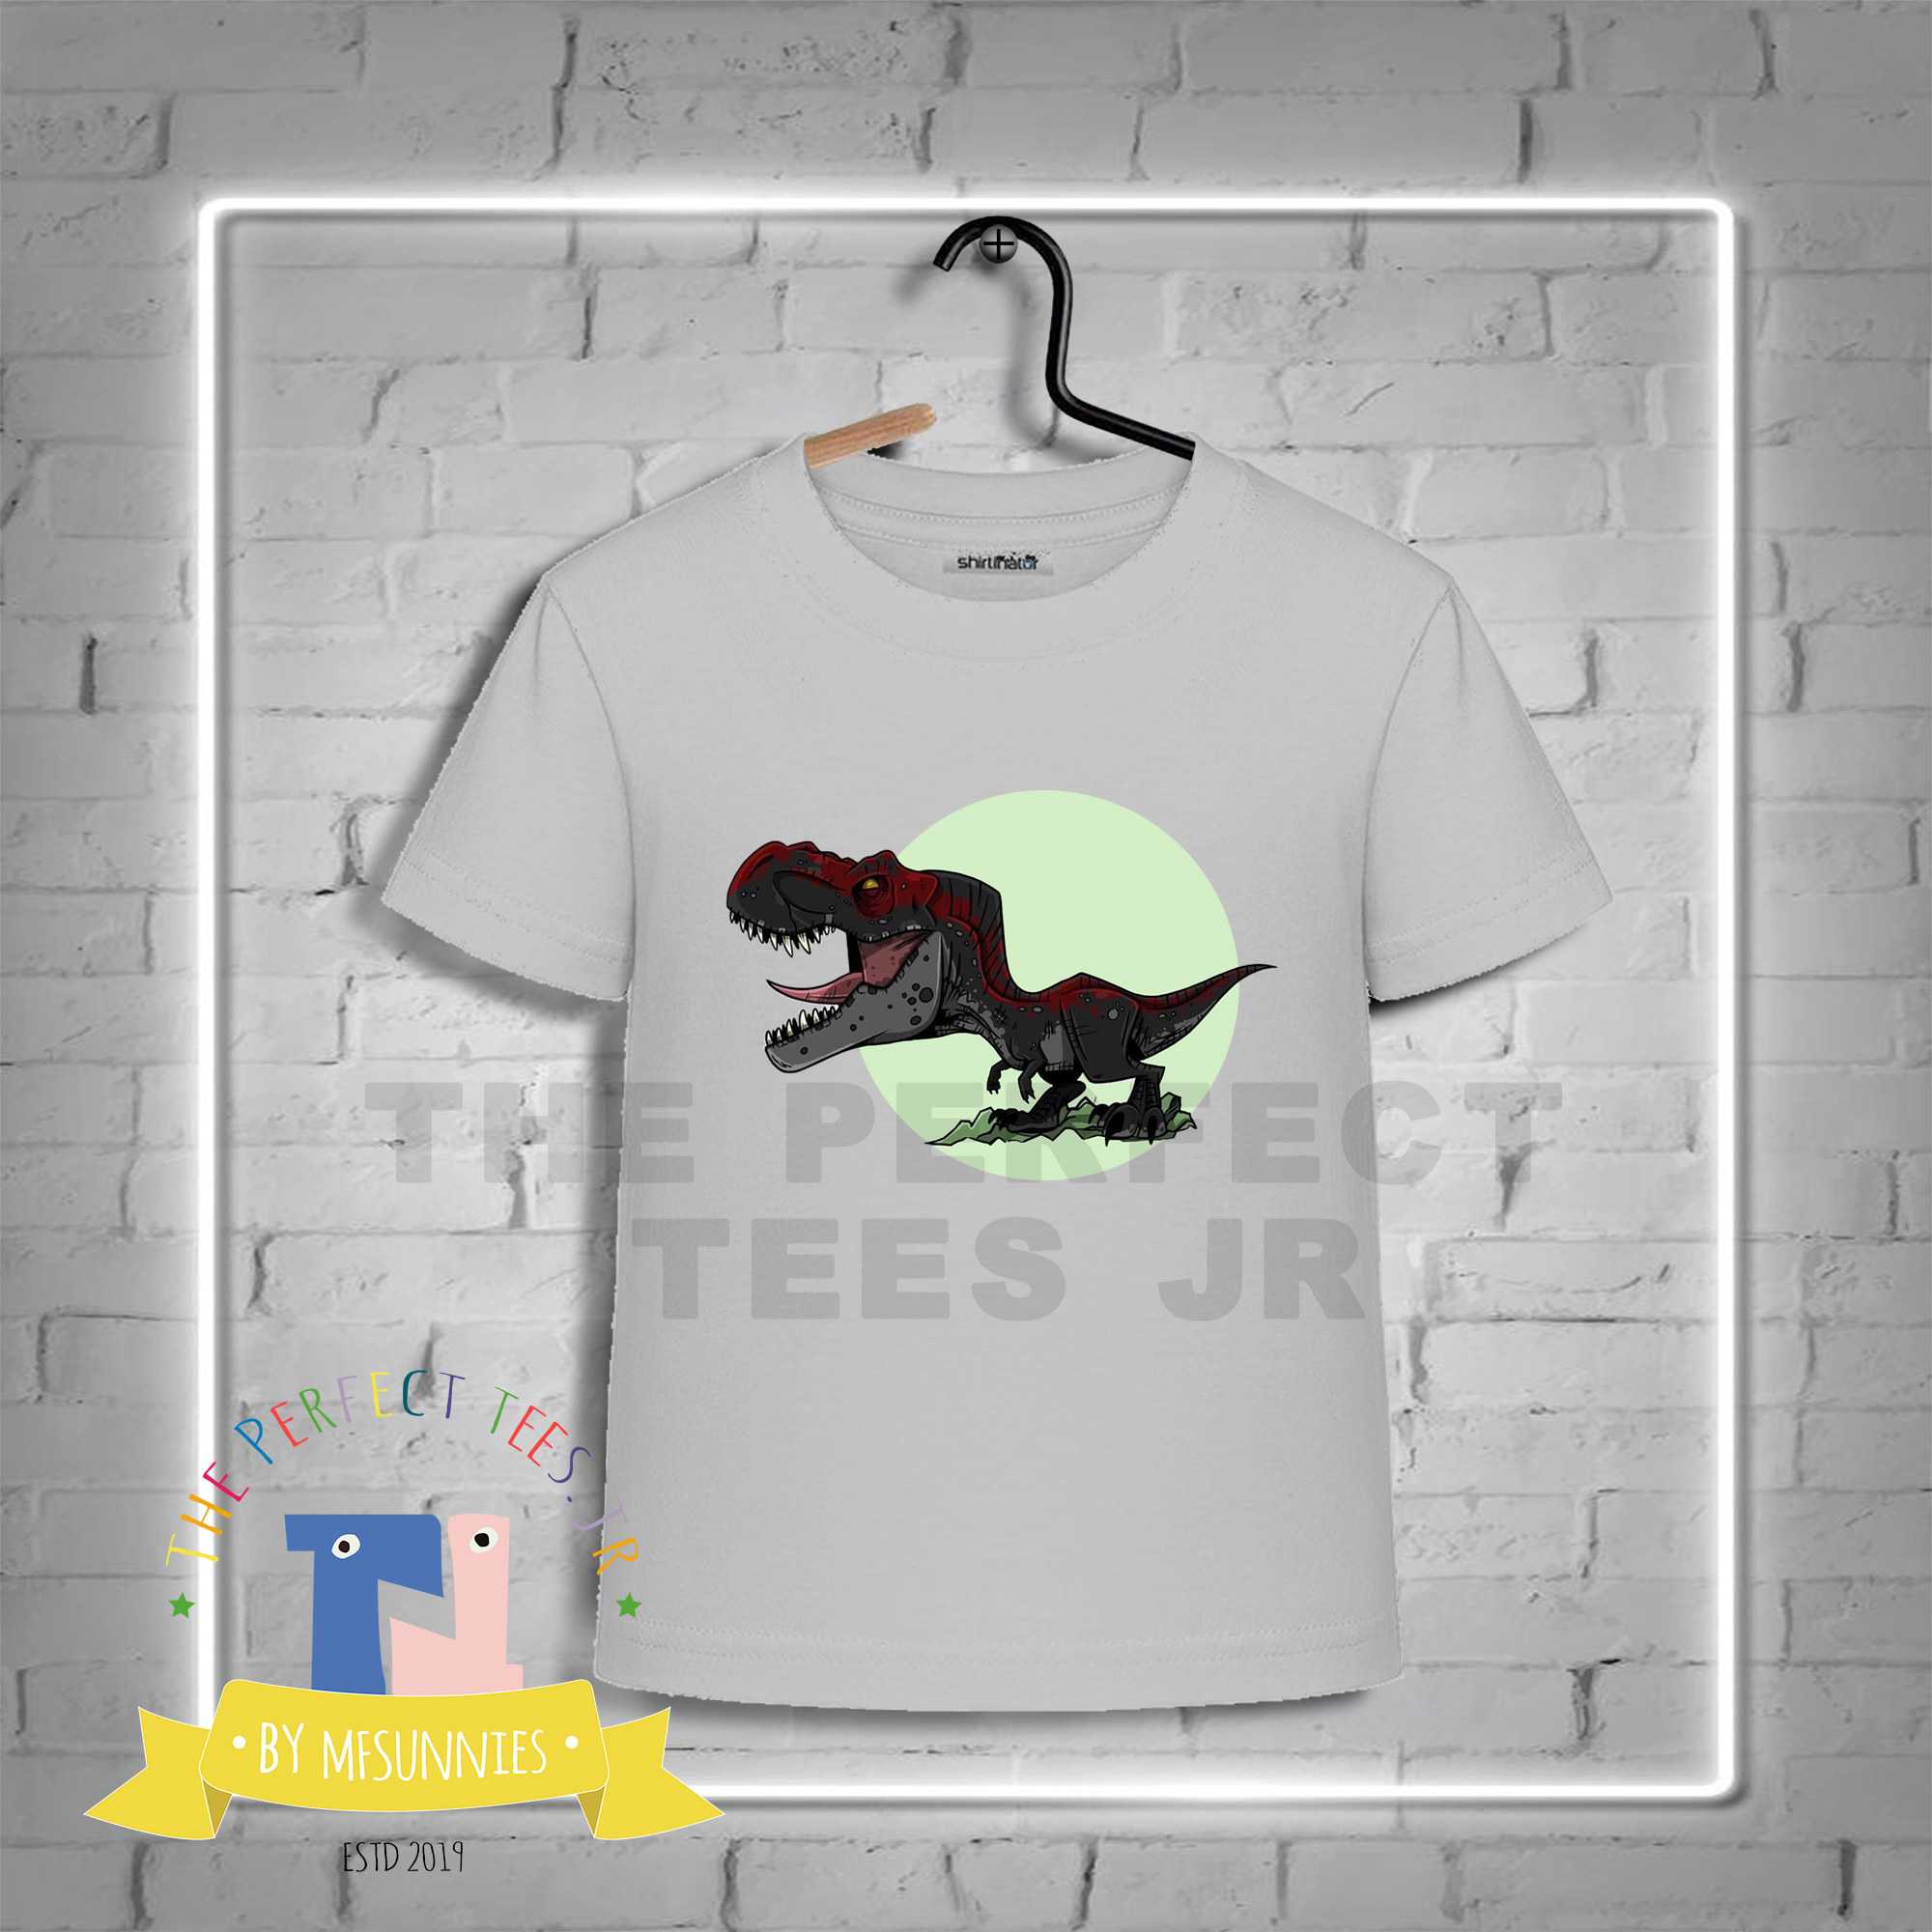 Buy T Shirts Shirts At Best Price Online Lazada Com Ph - 2020 roblox game print kids t shirt pants 2019 spring print